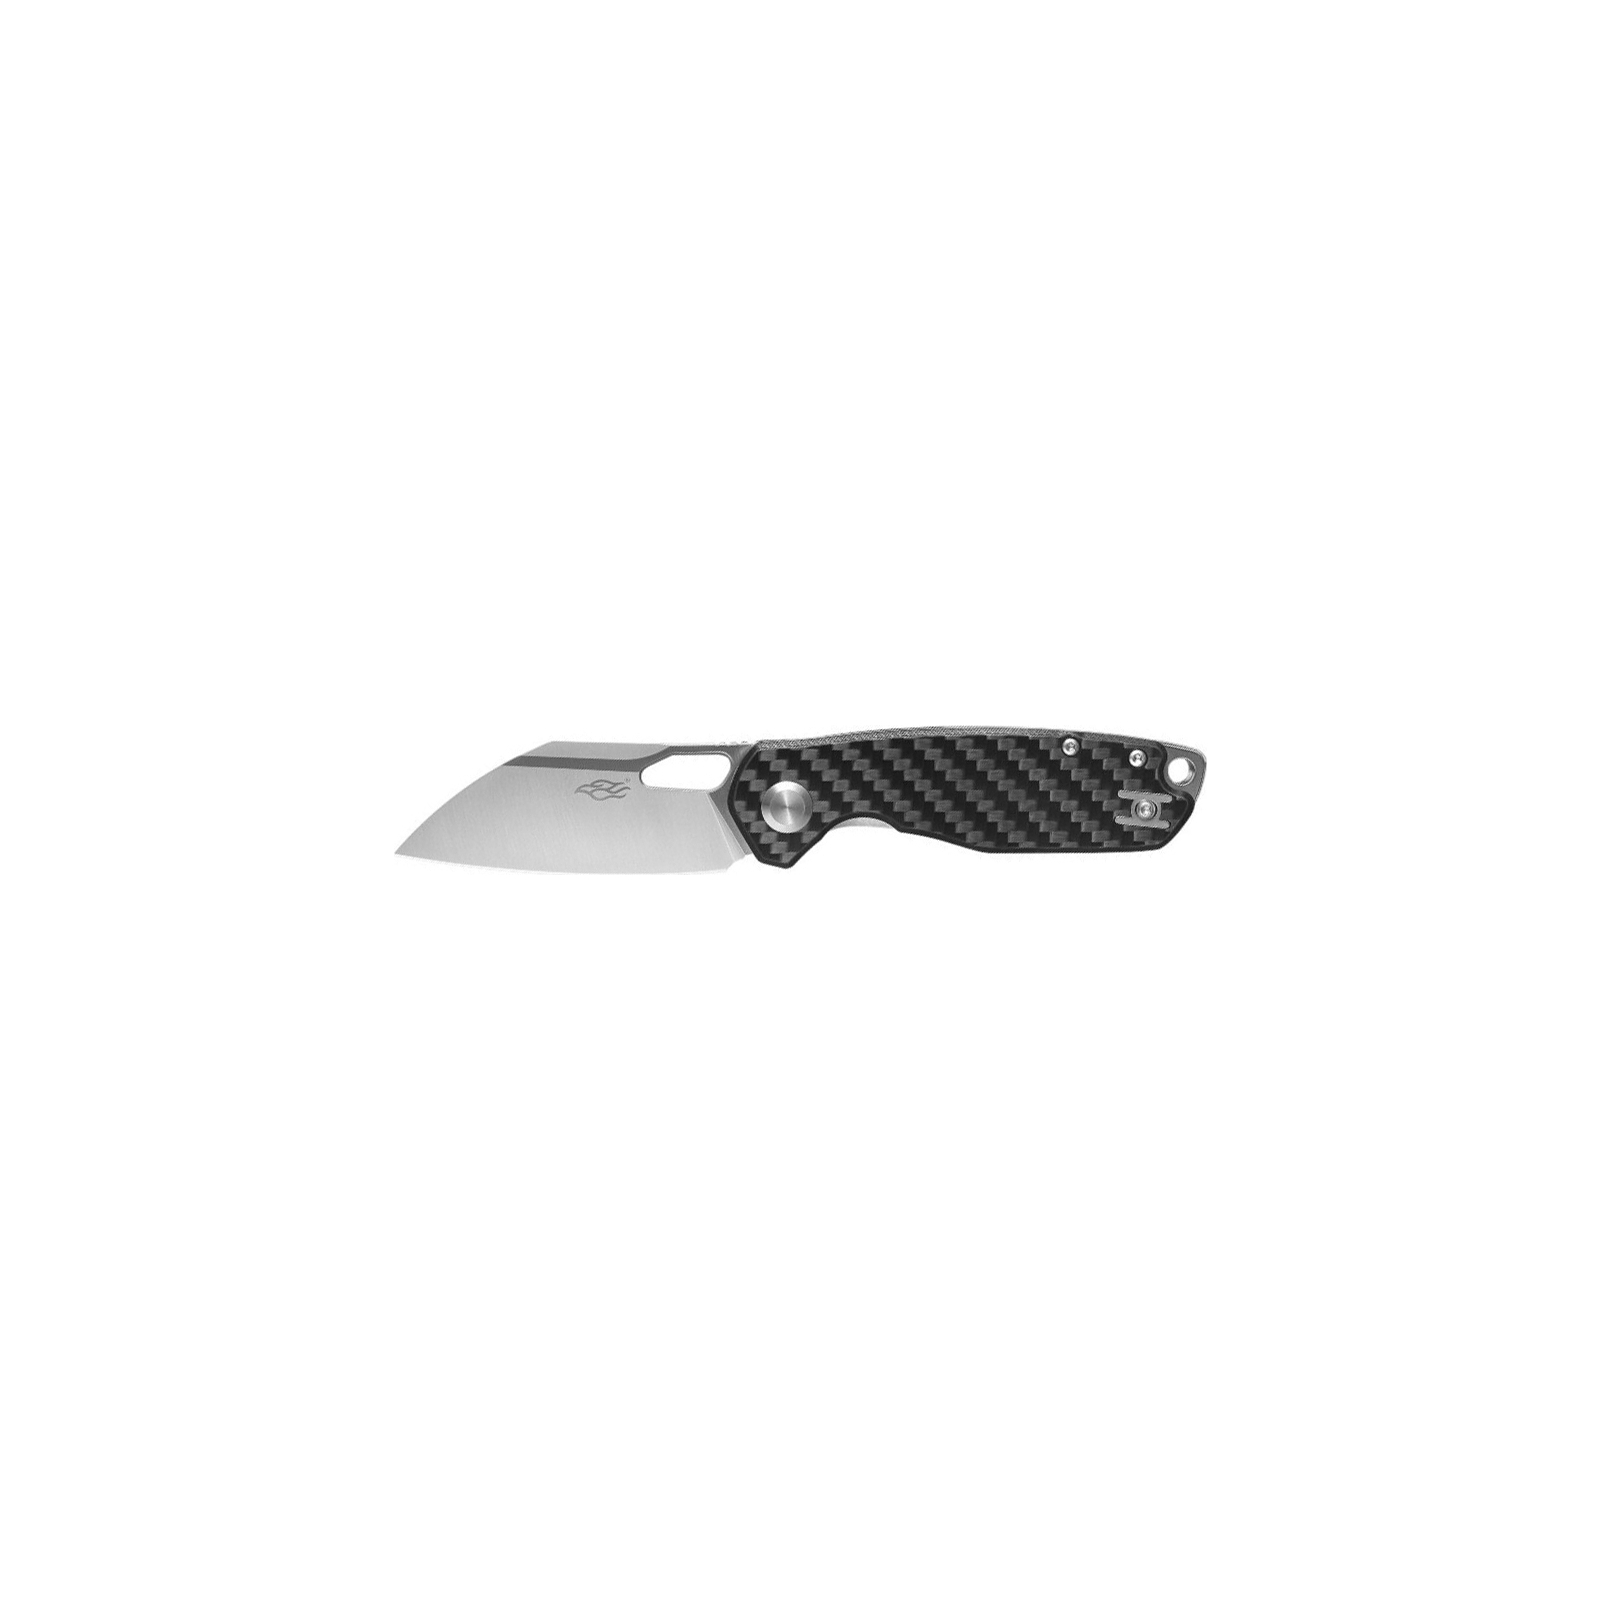 Нож Firebird FH924-GY сірий (FH924-GY)